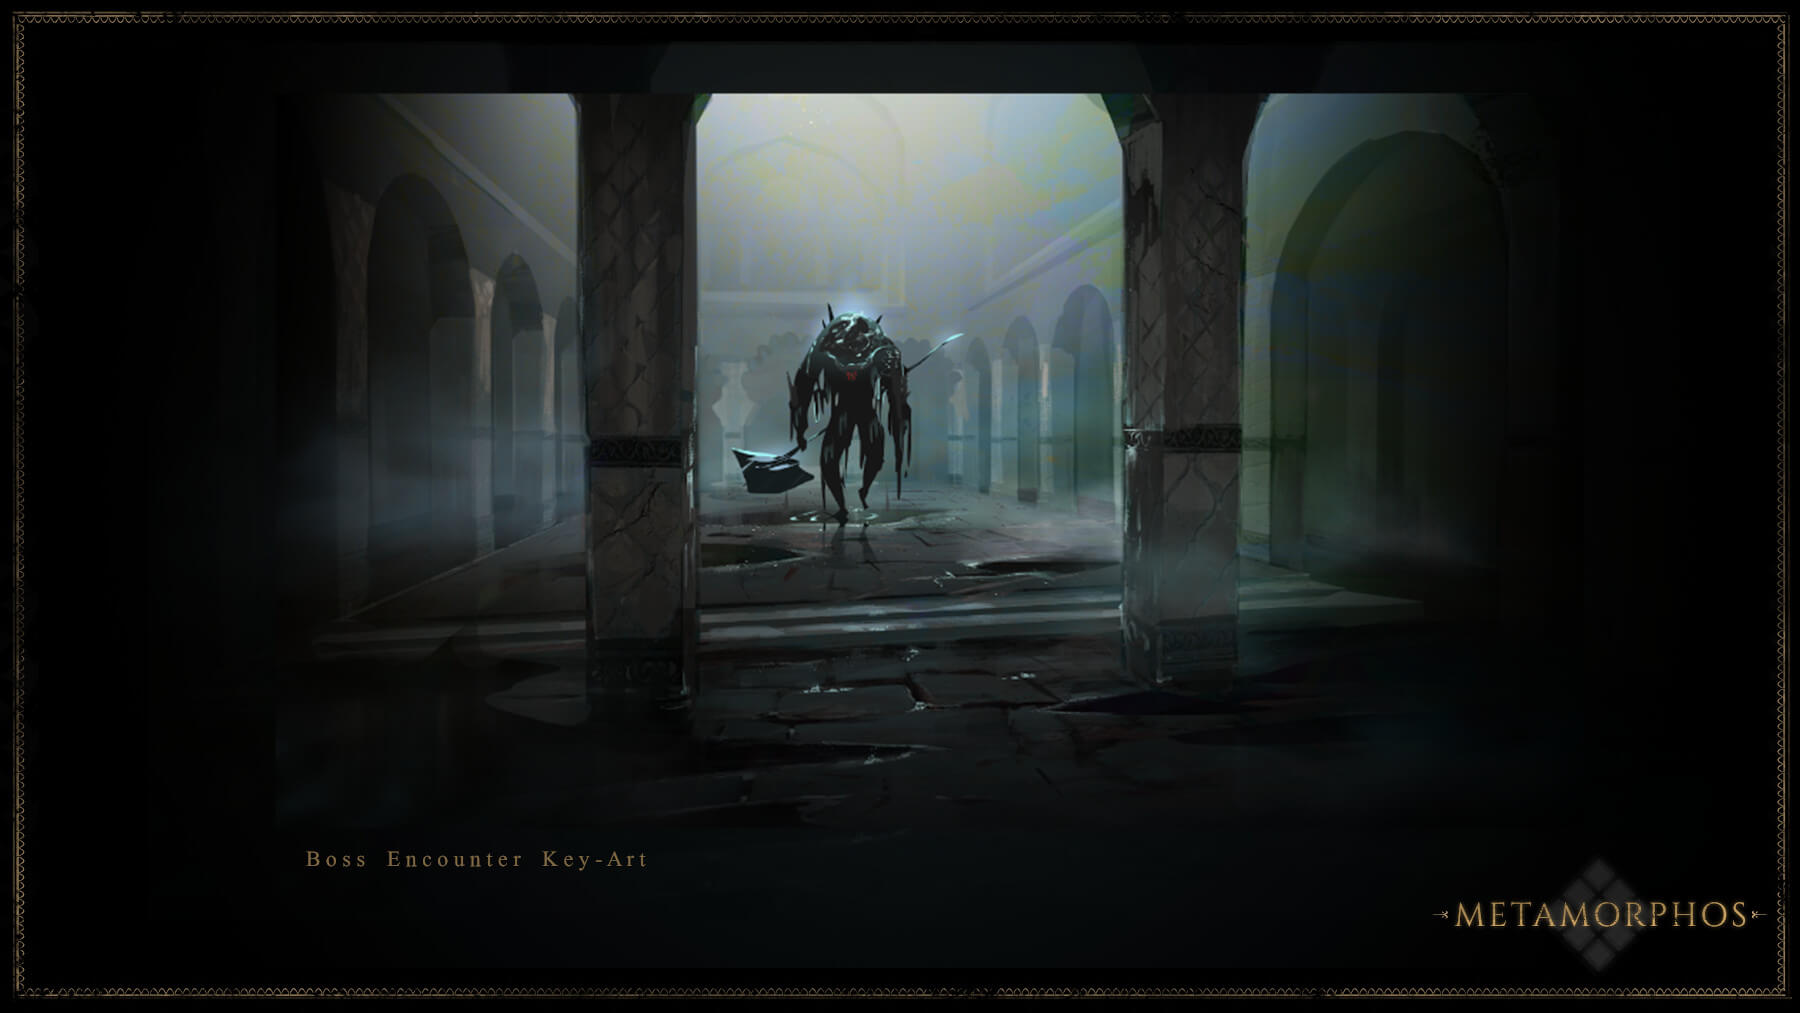 Hammer-wielding creature in a dark temple courtyard.